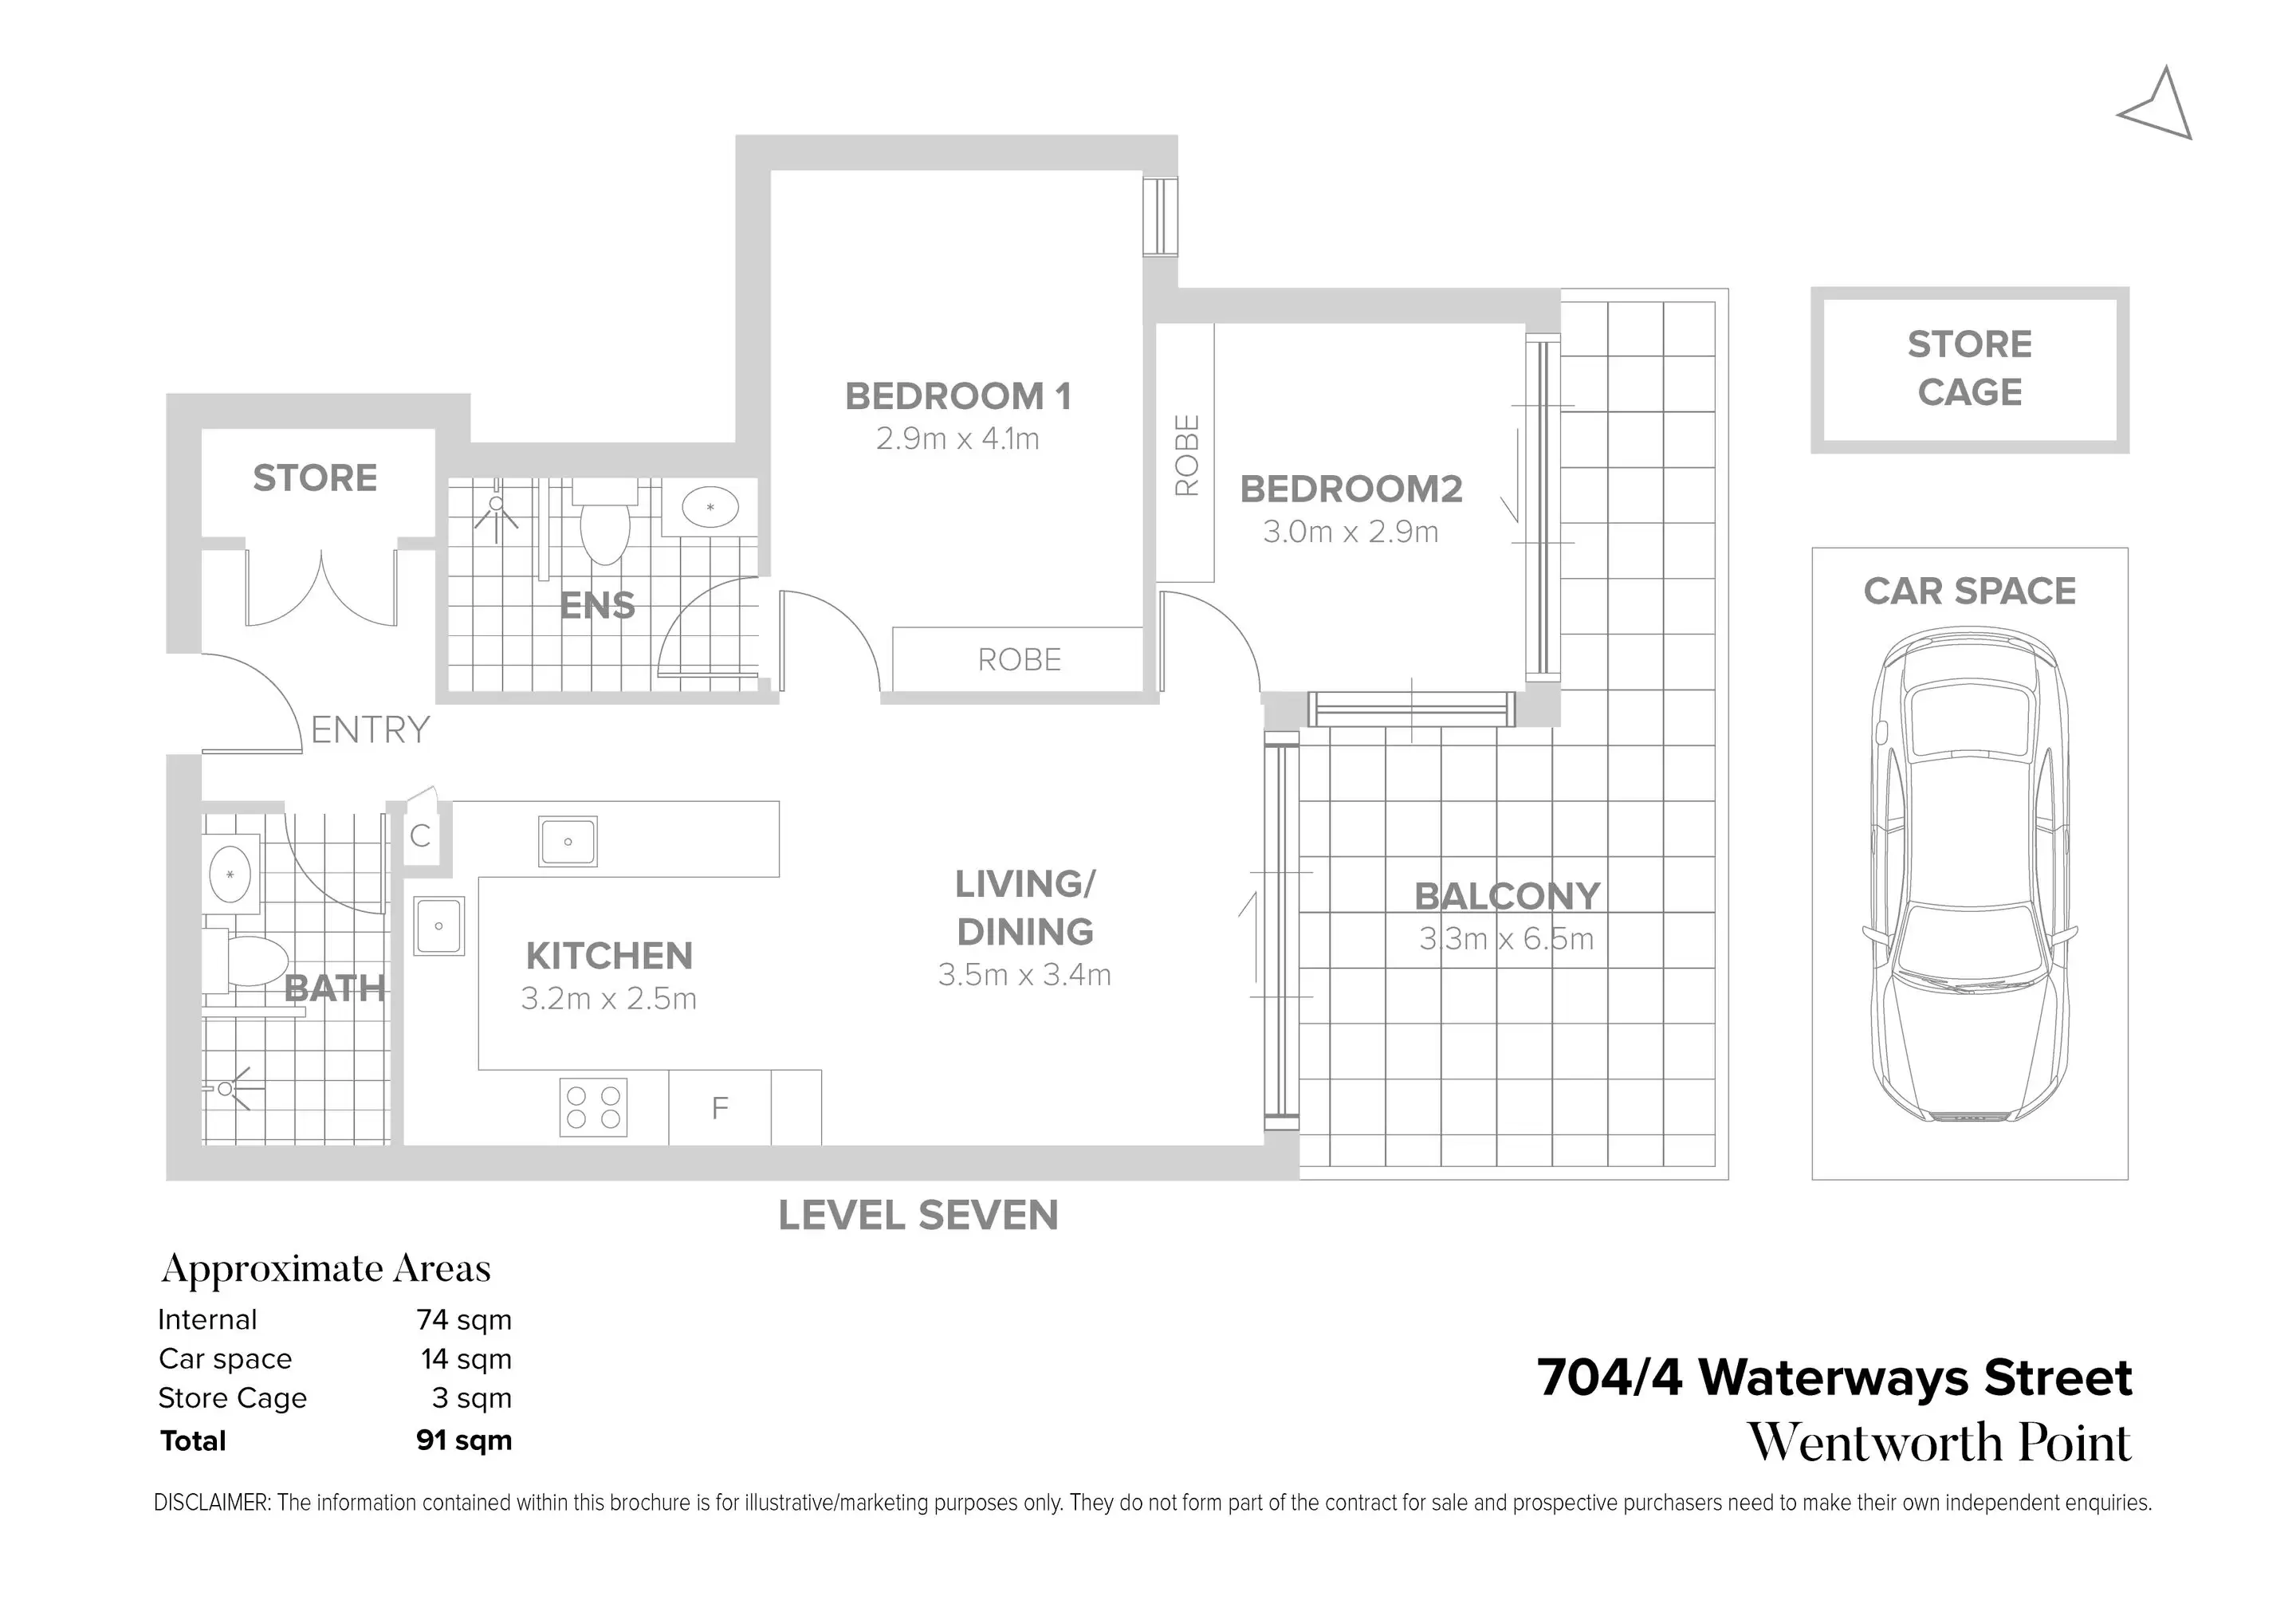 704/4 Waterways Street, Wentworth Point Sold by Chidiac Realty - floorplan